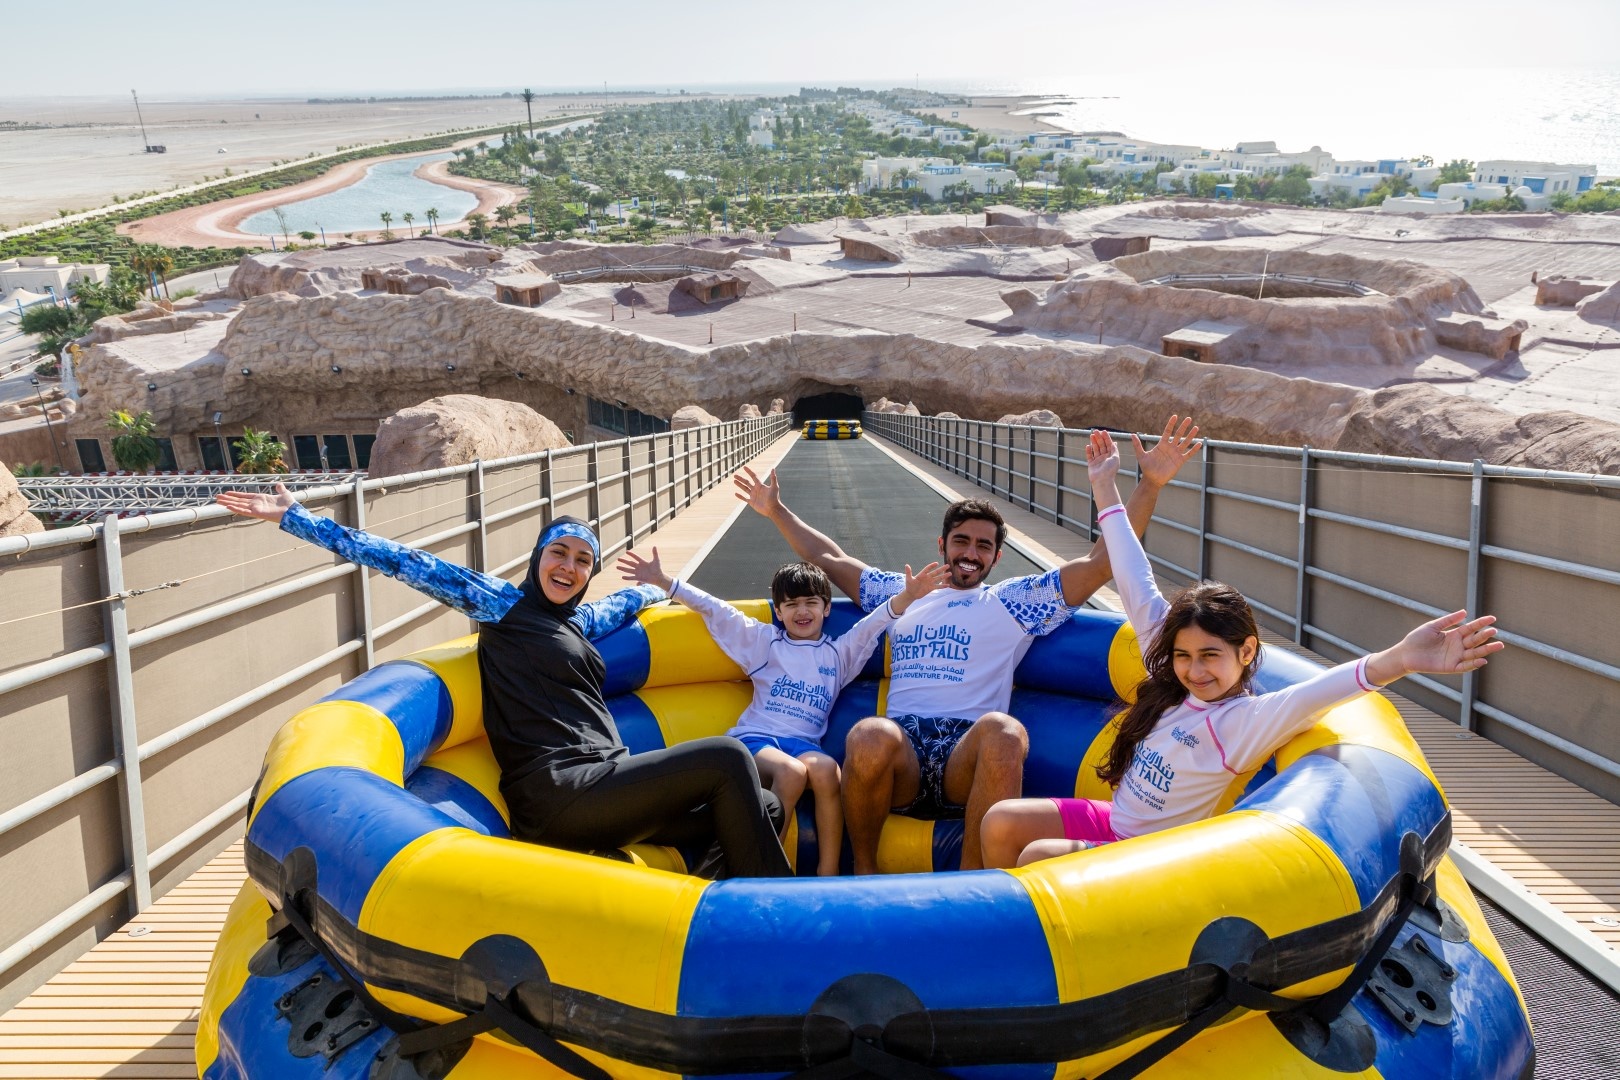 Spinning Rapids Ride, Sea Caves Water Park at Hilton Salwa Beach Resort, Qatar